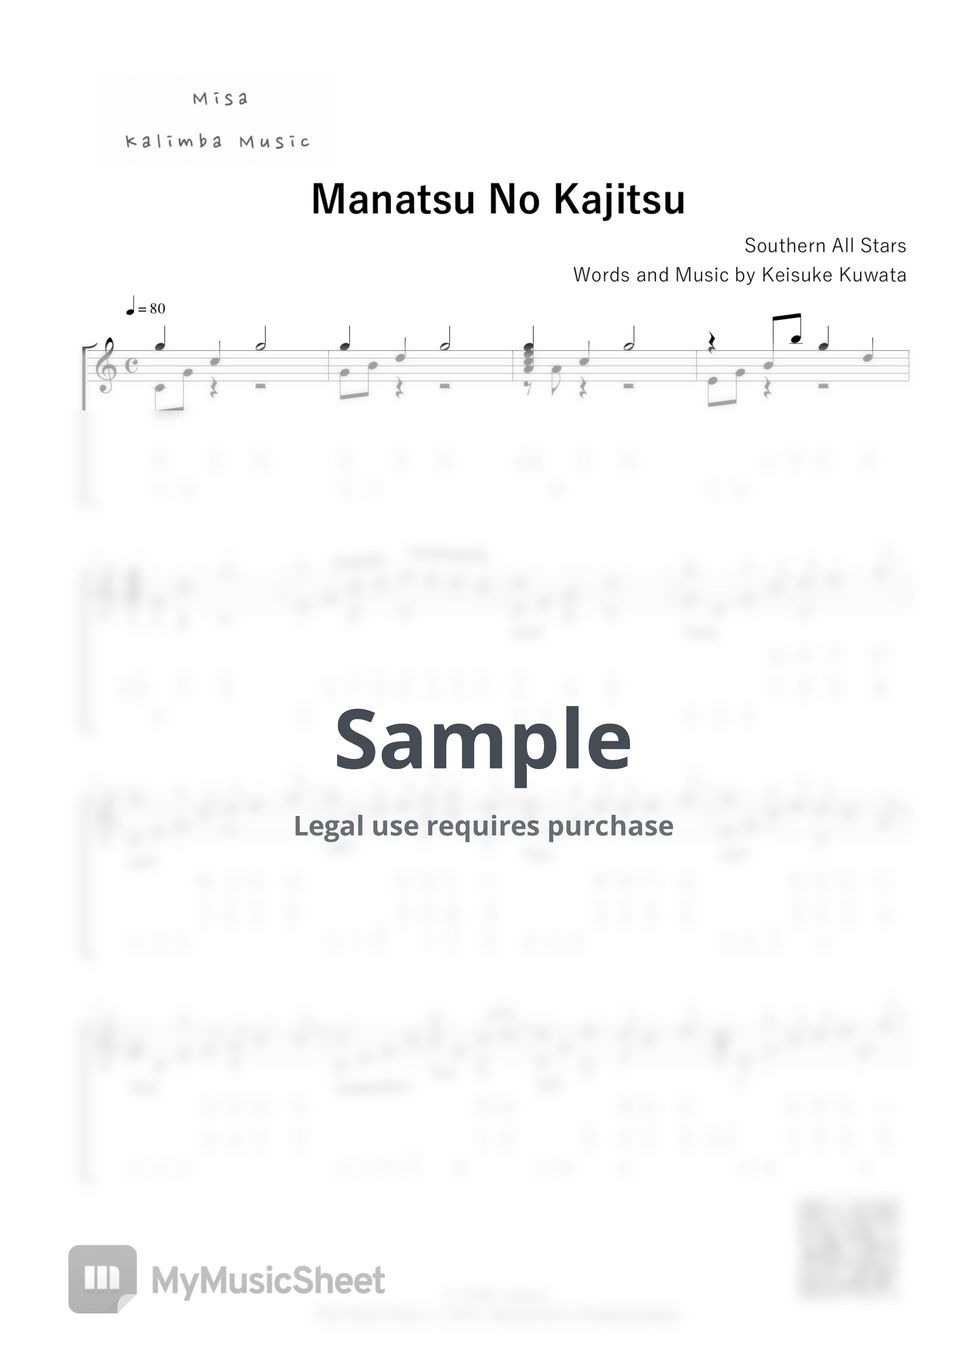 Southern All Stars - Manatsu No Kajitsu / 17 keys kalimba / Number Notation by Misa / Kalimba Music